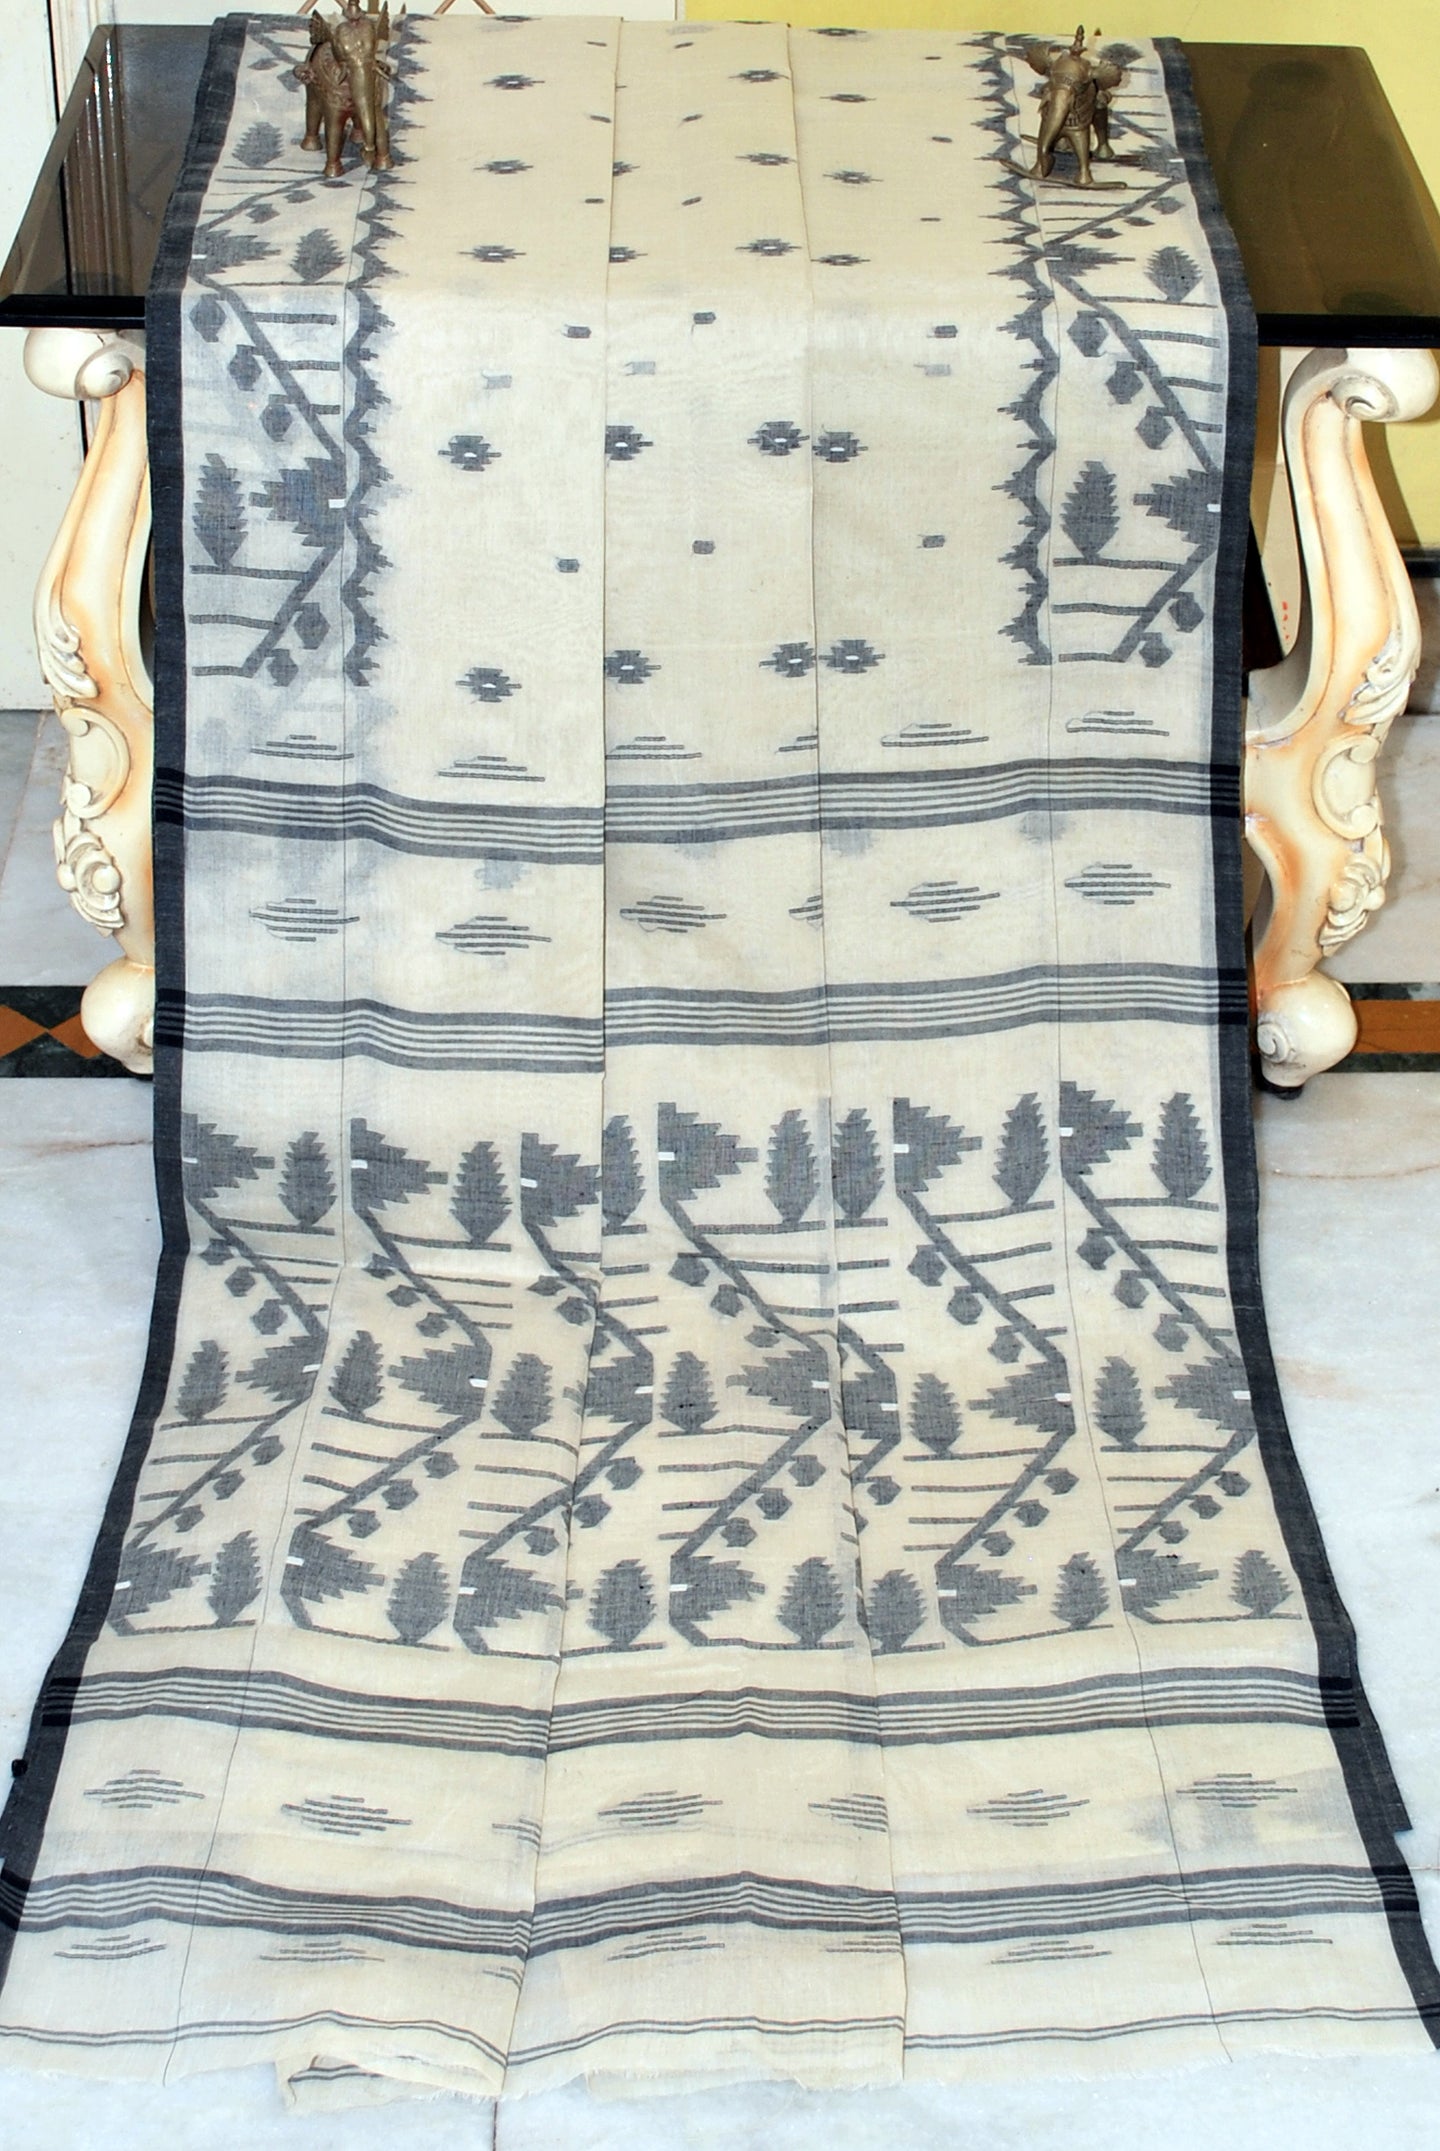 Hand Karat Needle Woven Work Pure Cotton Bengal Jamdani Saree in Parchment White and Black